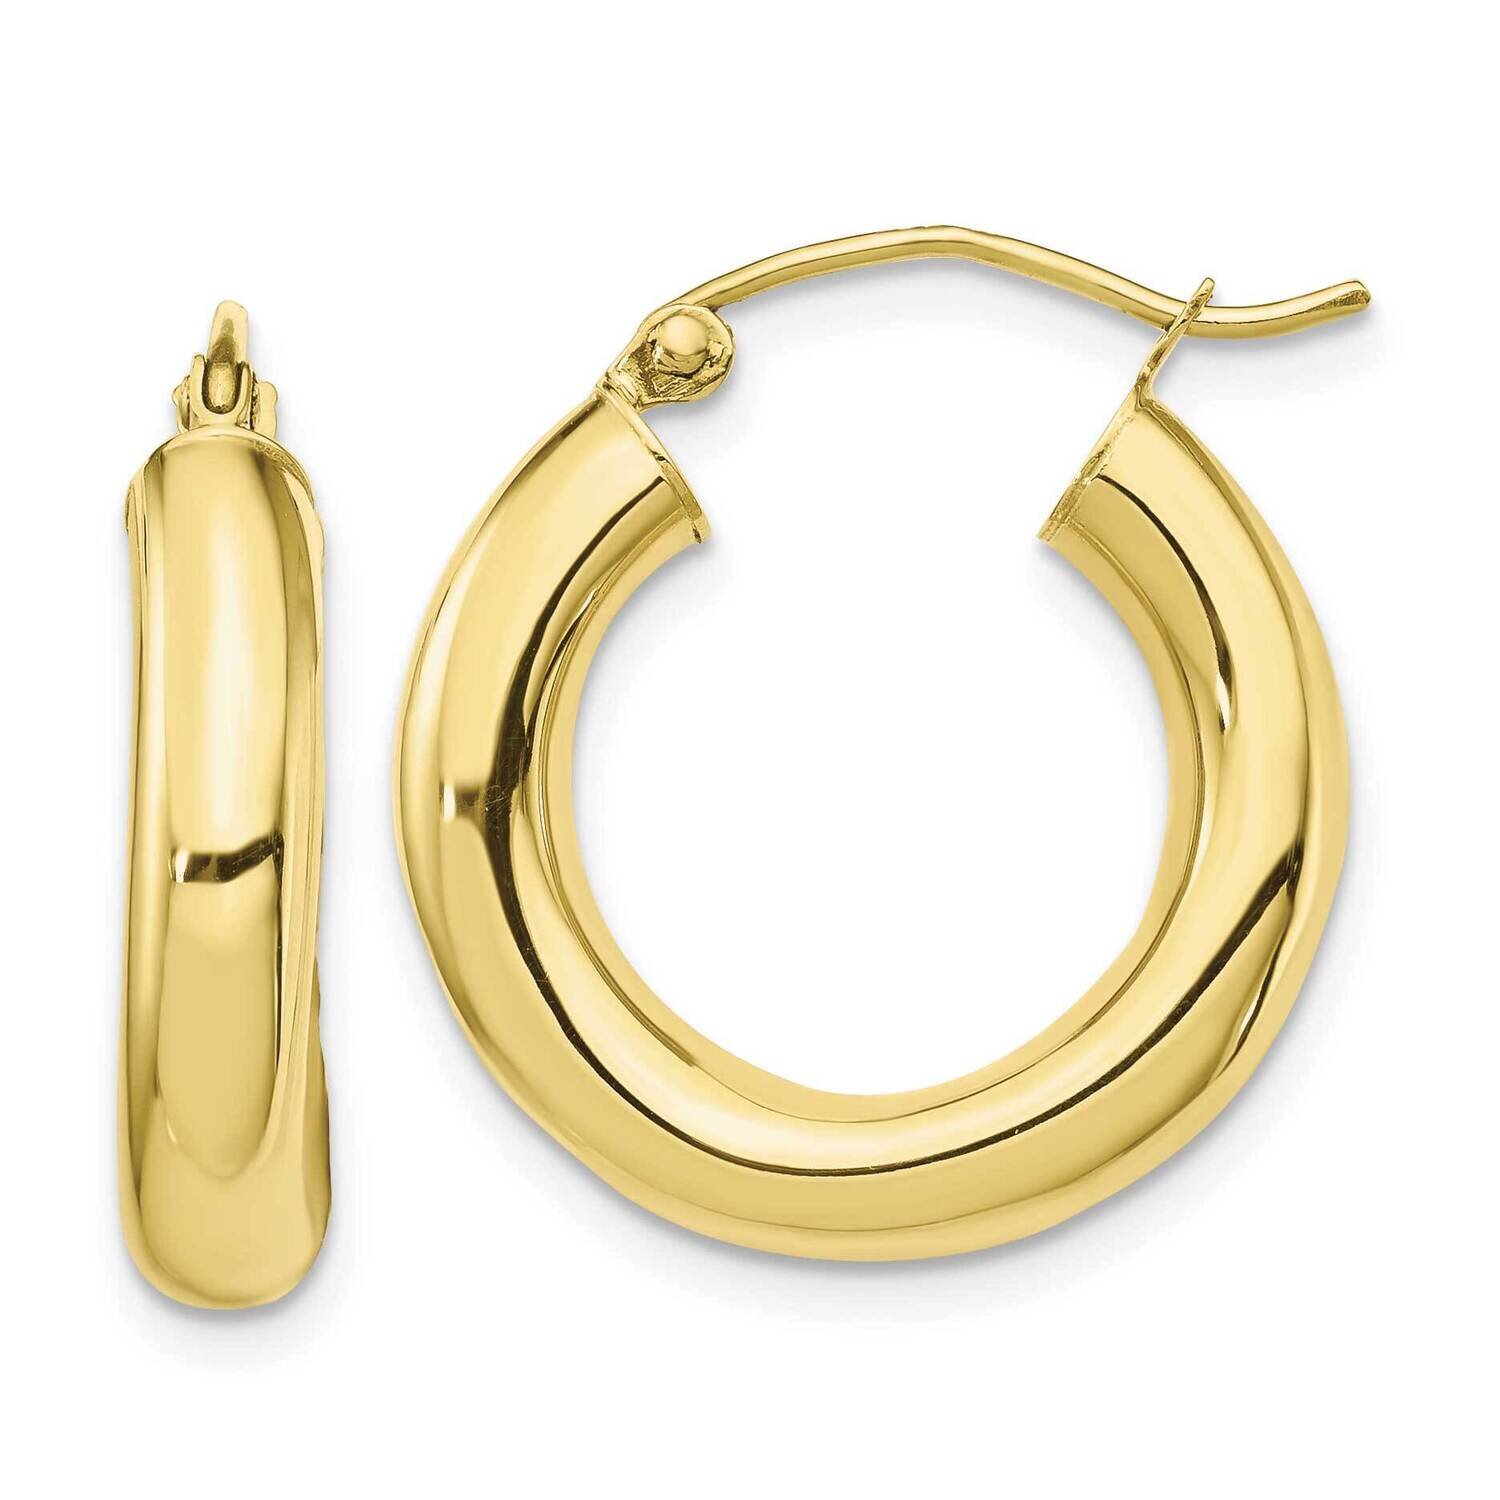 4mm Tube Hoop Earrings 10k Gold Polished 10T1163